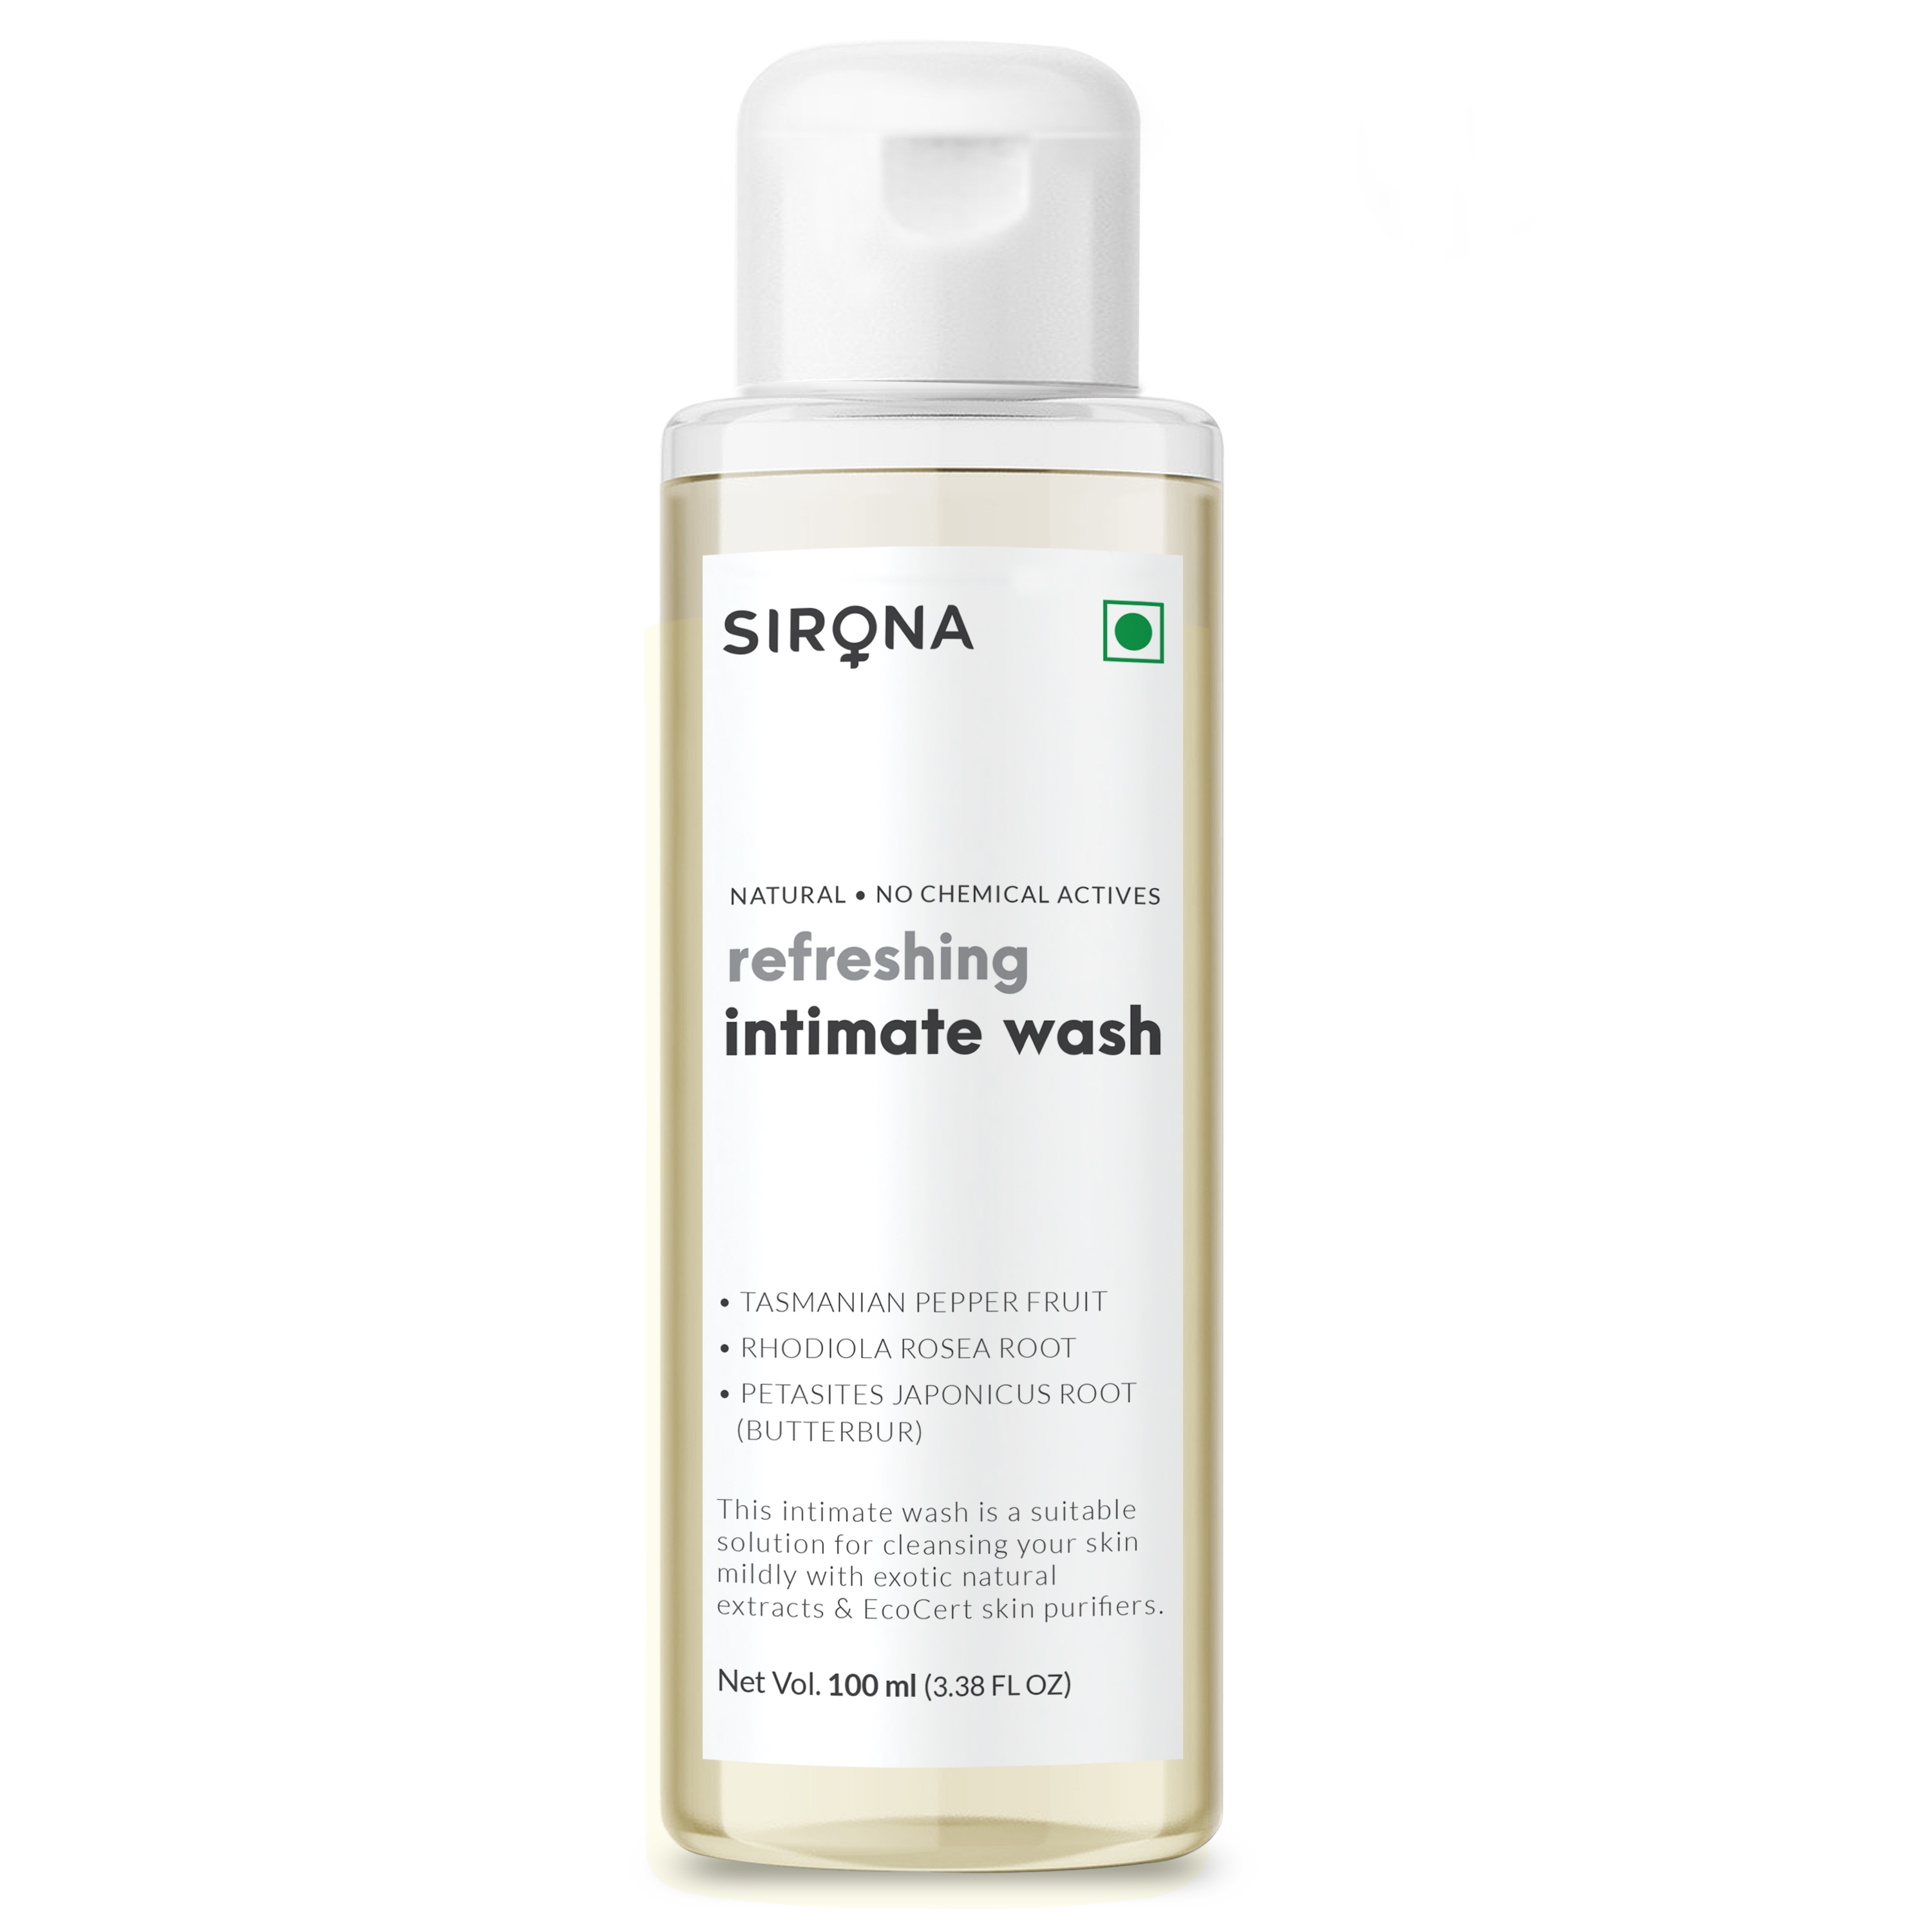 Sirona | Sirona Natural pH balanced Intimate Wash with 5 Magical Herbs & No Chemical Actives for Men and Women - 100 ml